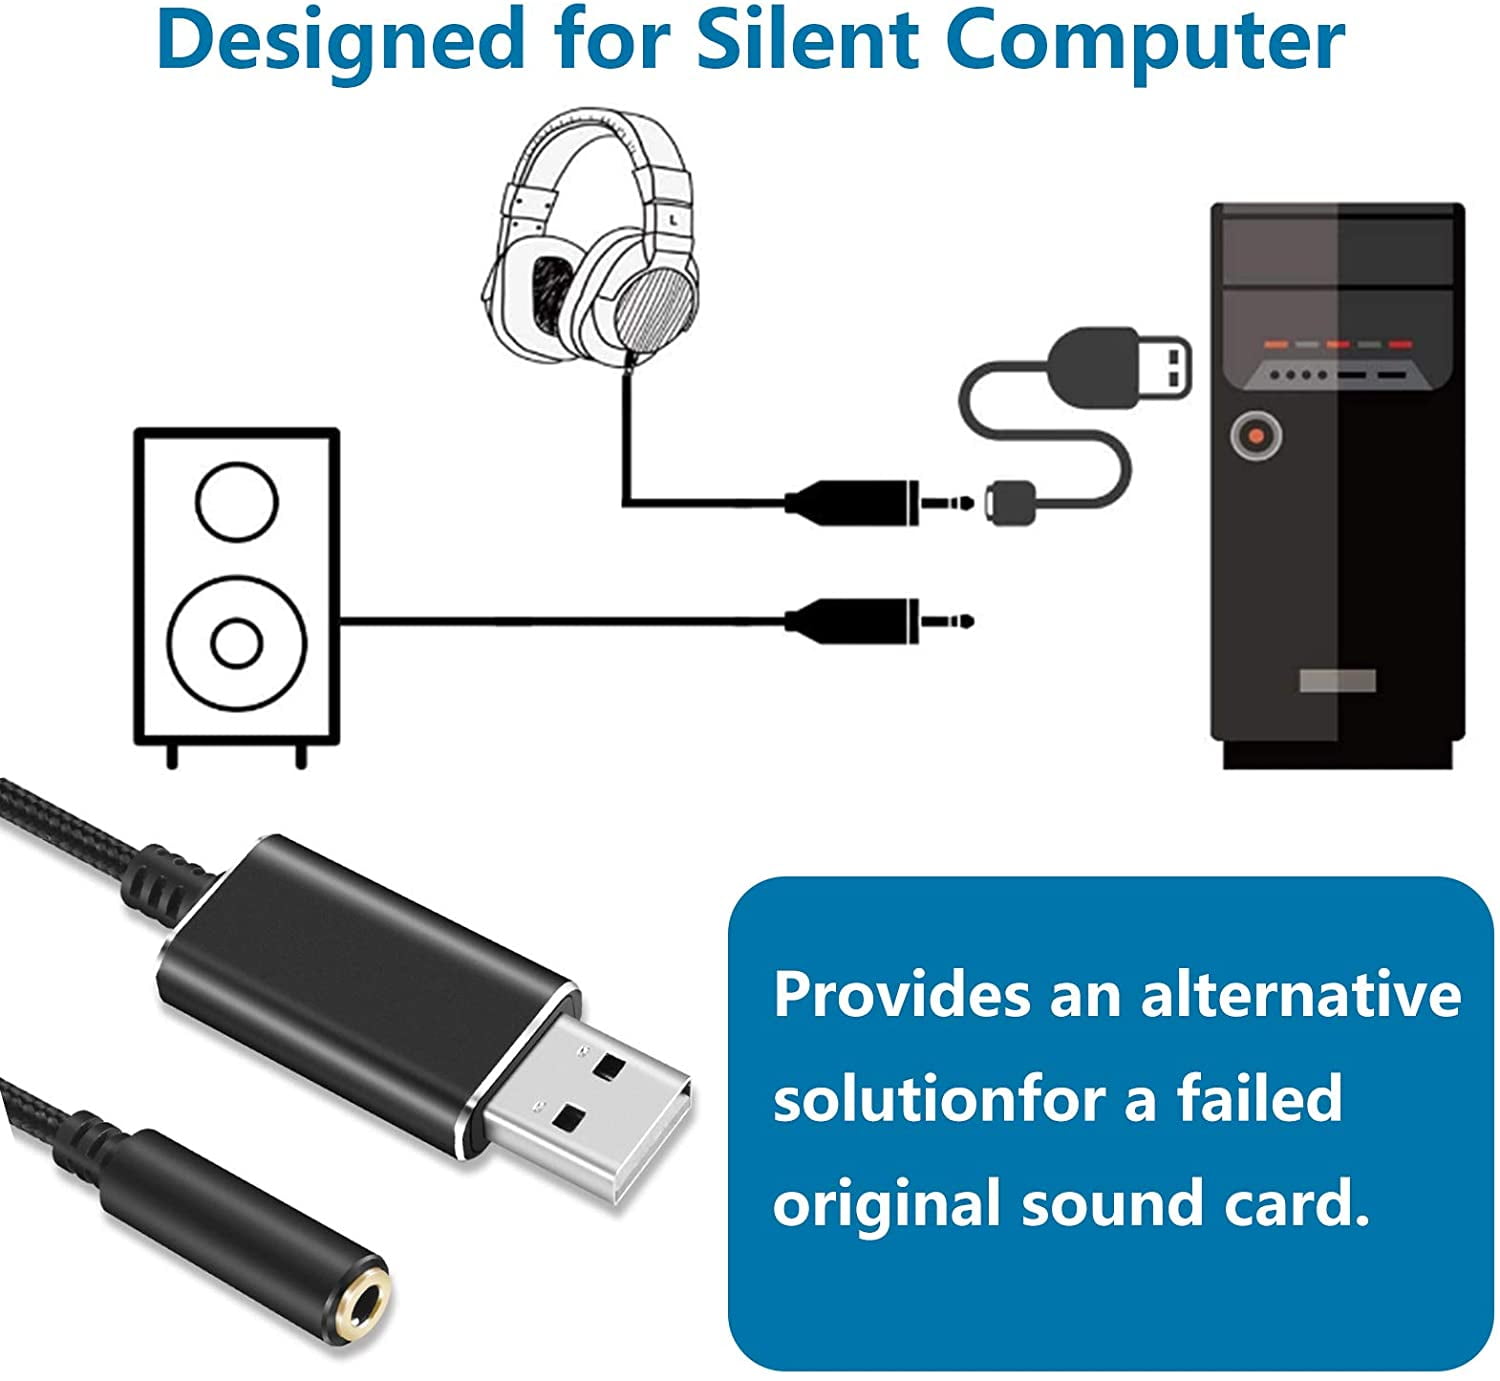 Adaptateur USB / jack audio + micro carton son externe compatible  Windows/Mac/Chrome OS Linux, plug & play